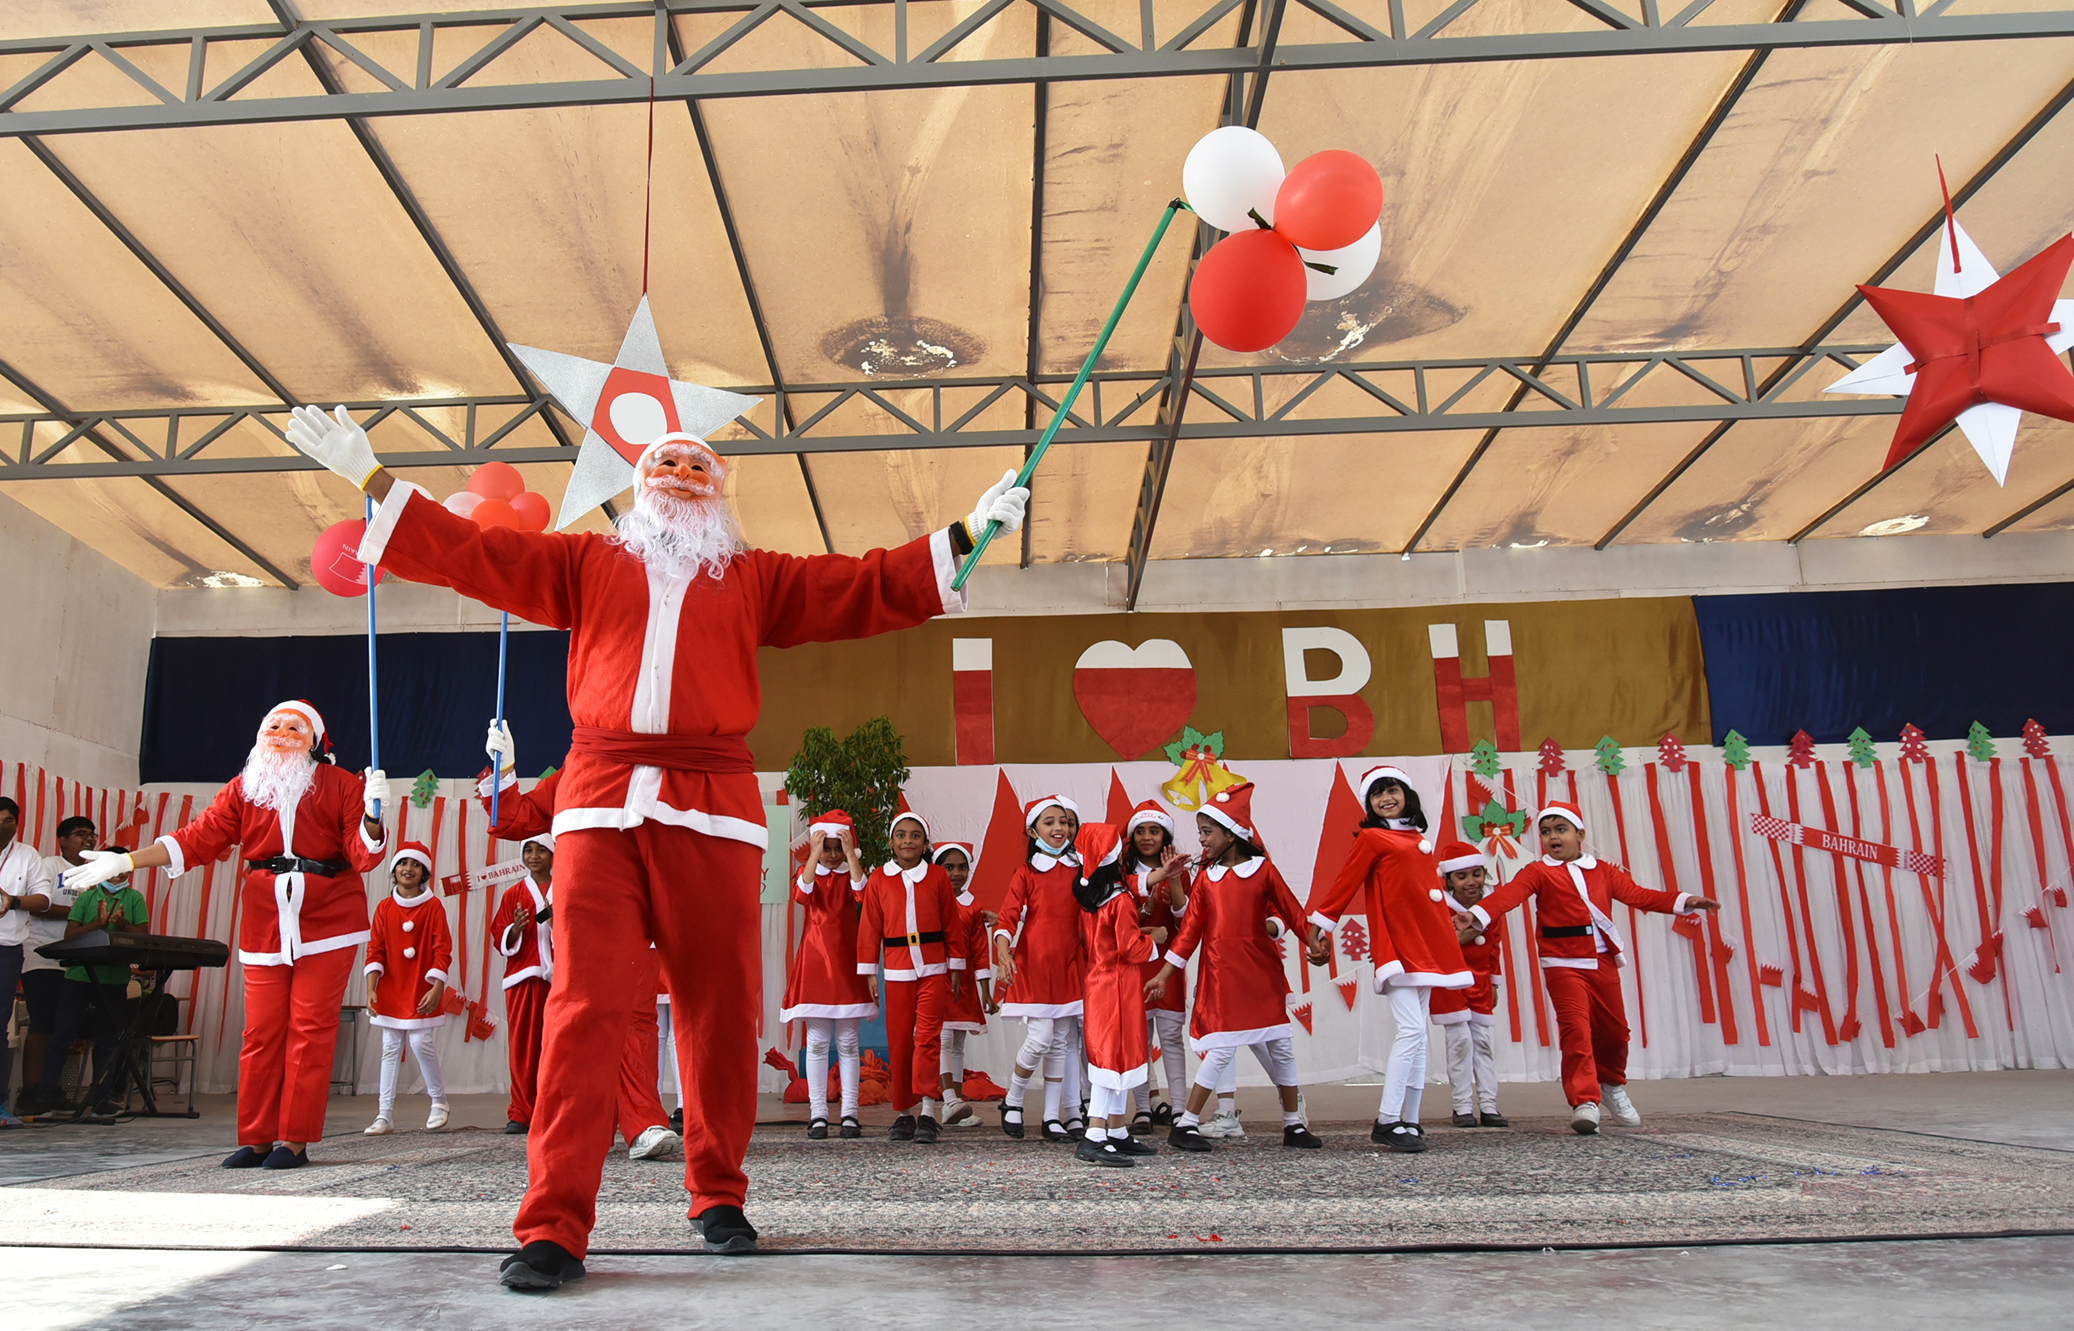 Bahrain National Day & Christmas Celebration Images